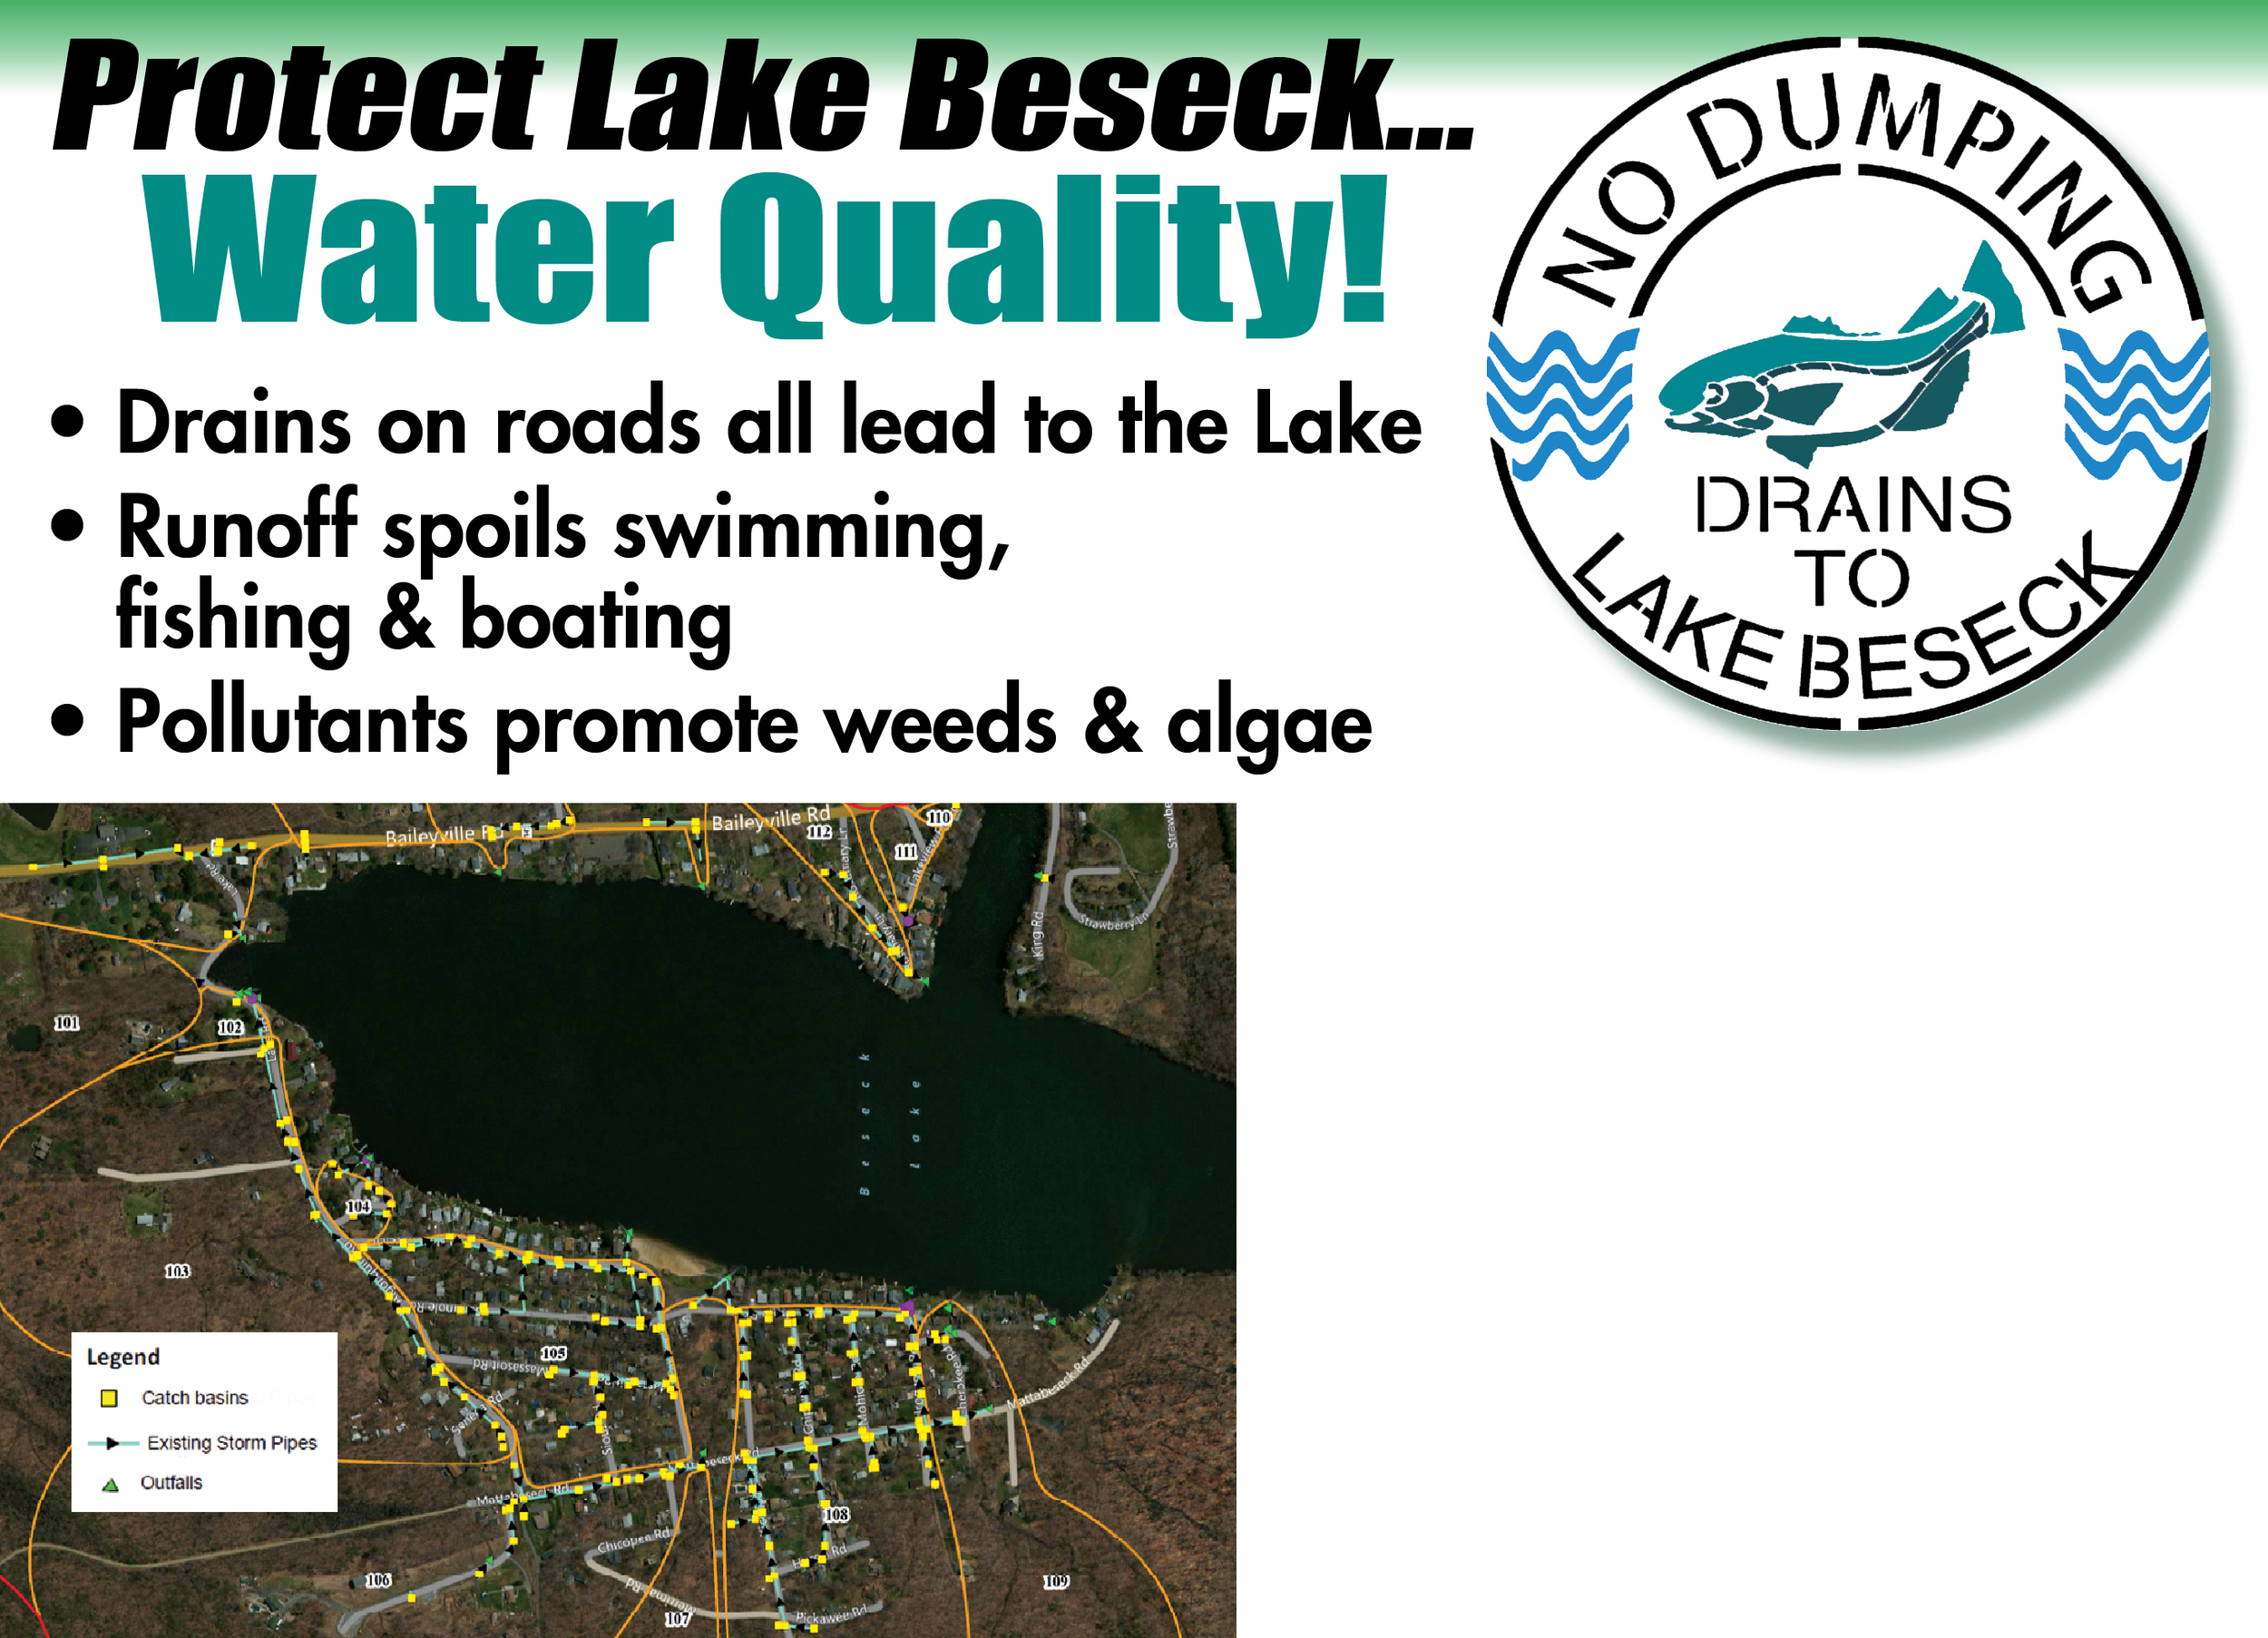 Lake Beseck Postcard back 2015.jpg